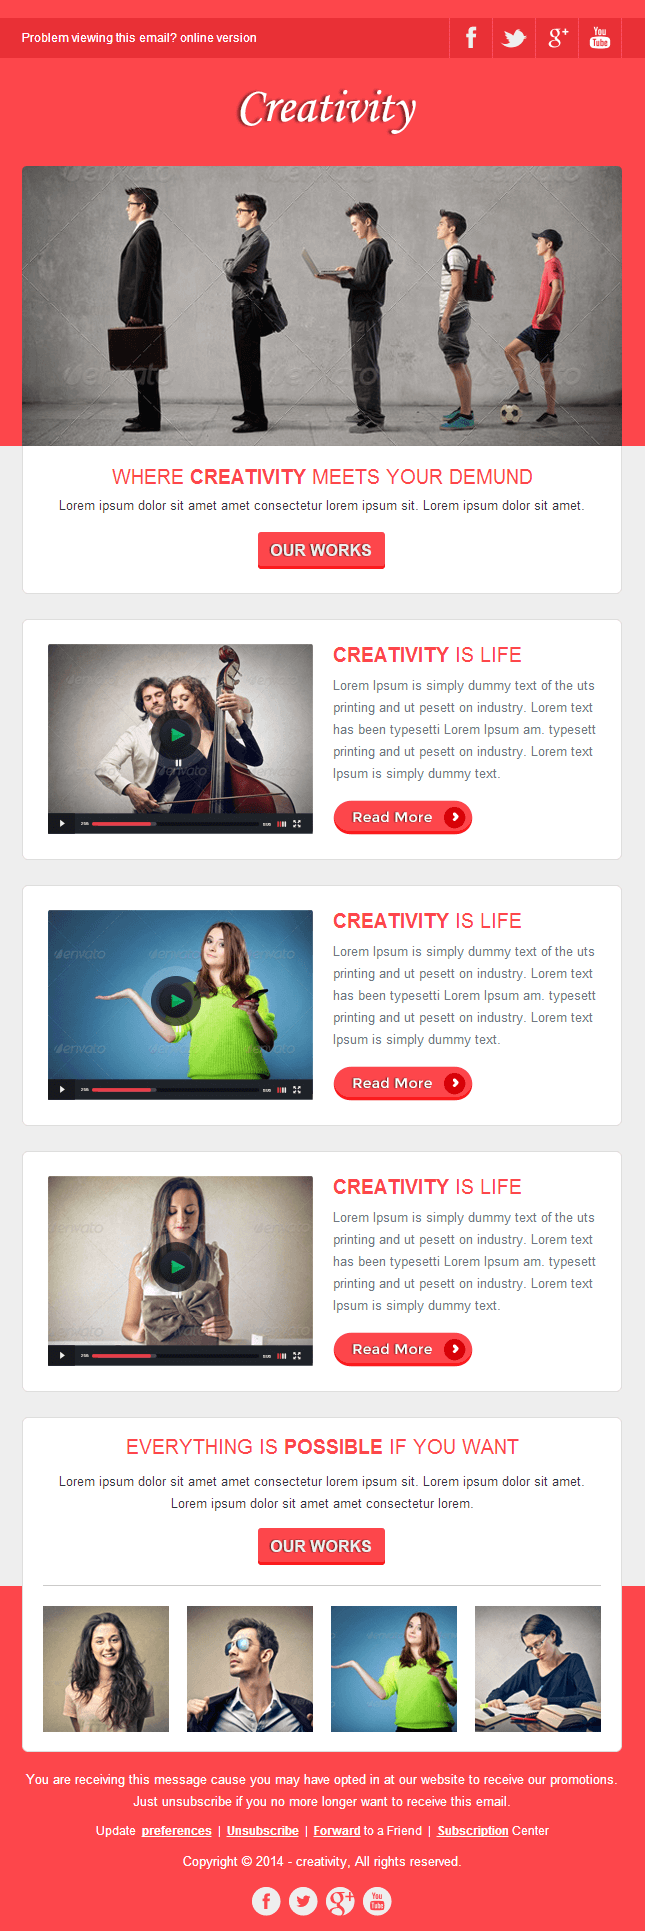 Creativity_email